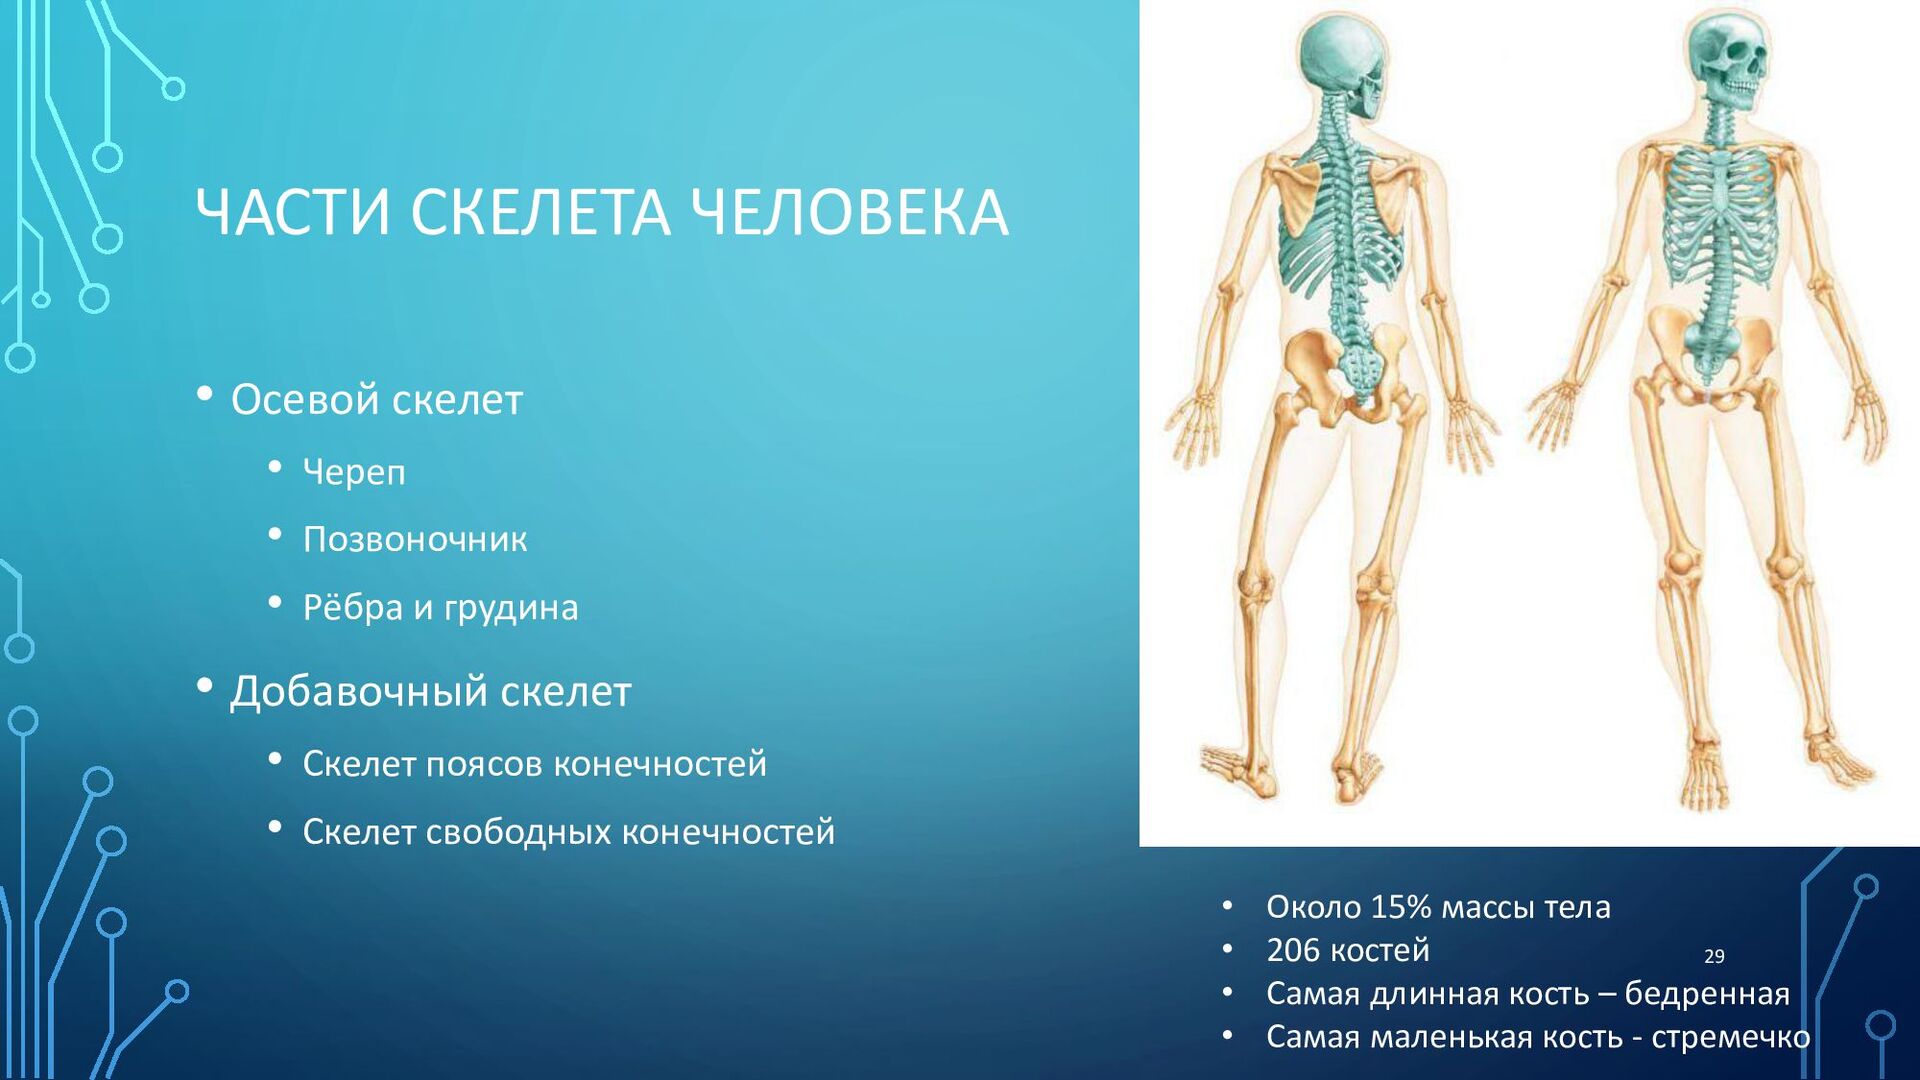 Признаки осевого скелета современного человека